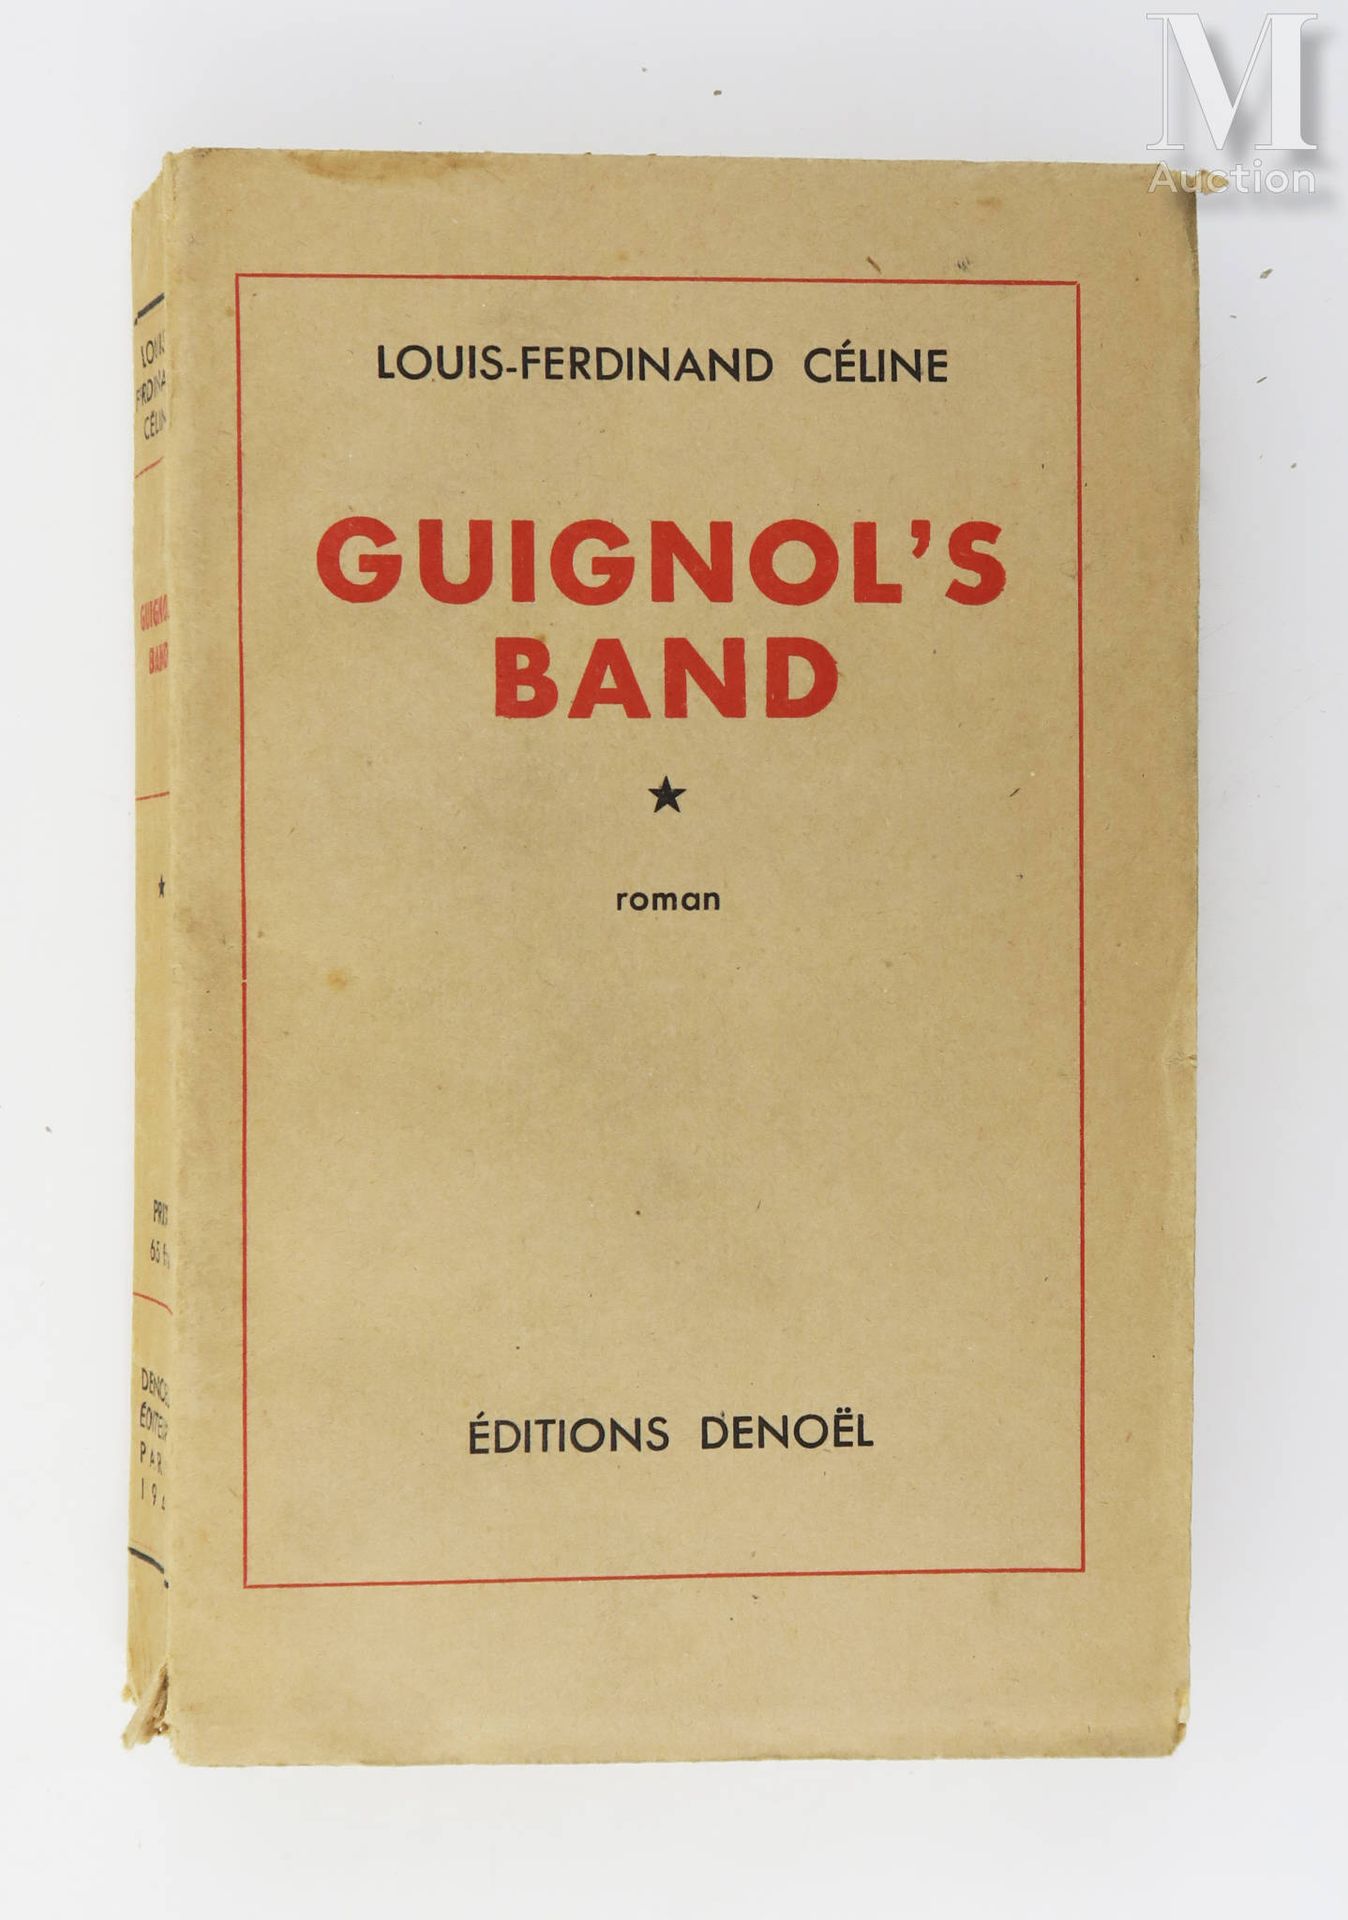 CÉLINE (Louis-Ferdinand). 吉格诺尔的乐队。巴黎，Denoël，1944年。

8开本平装，印刷封面。折叠式摄影正面插图。 

第一版。&hellip;